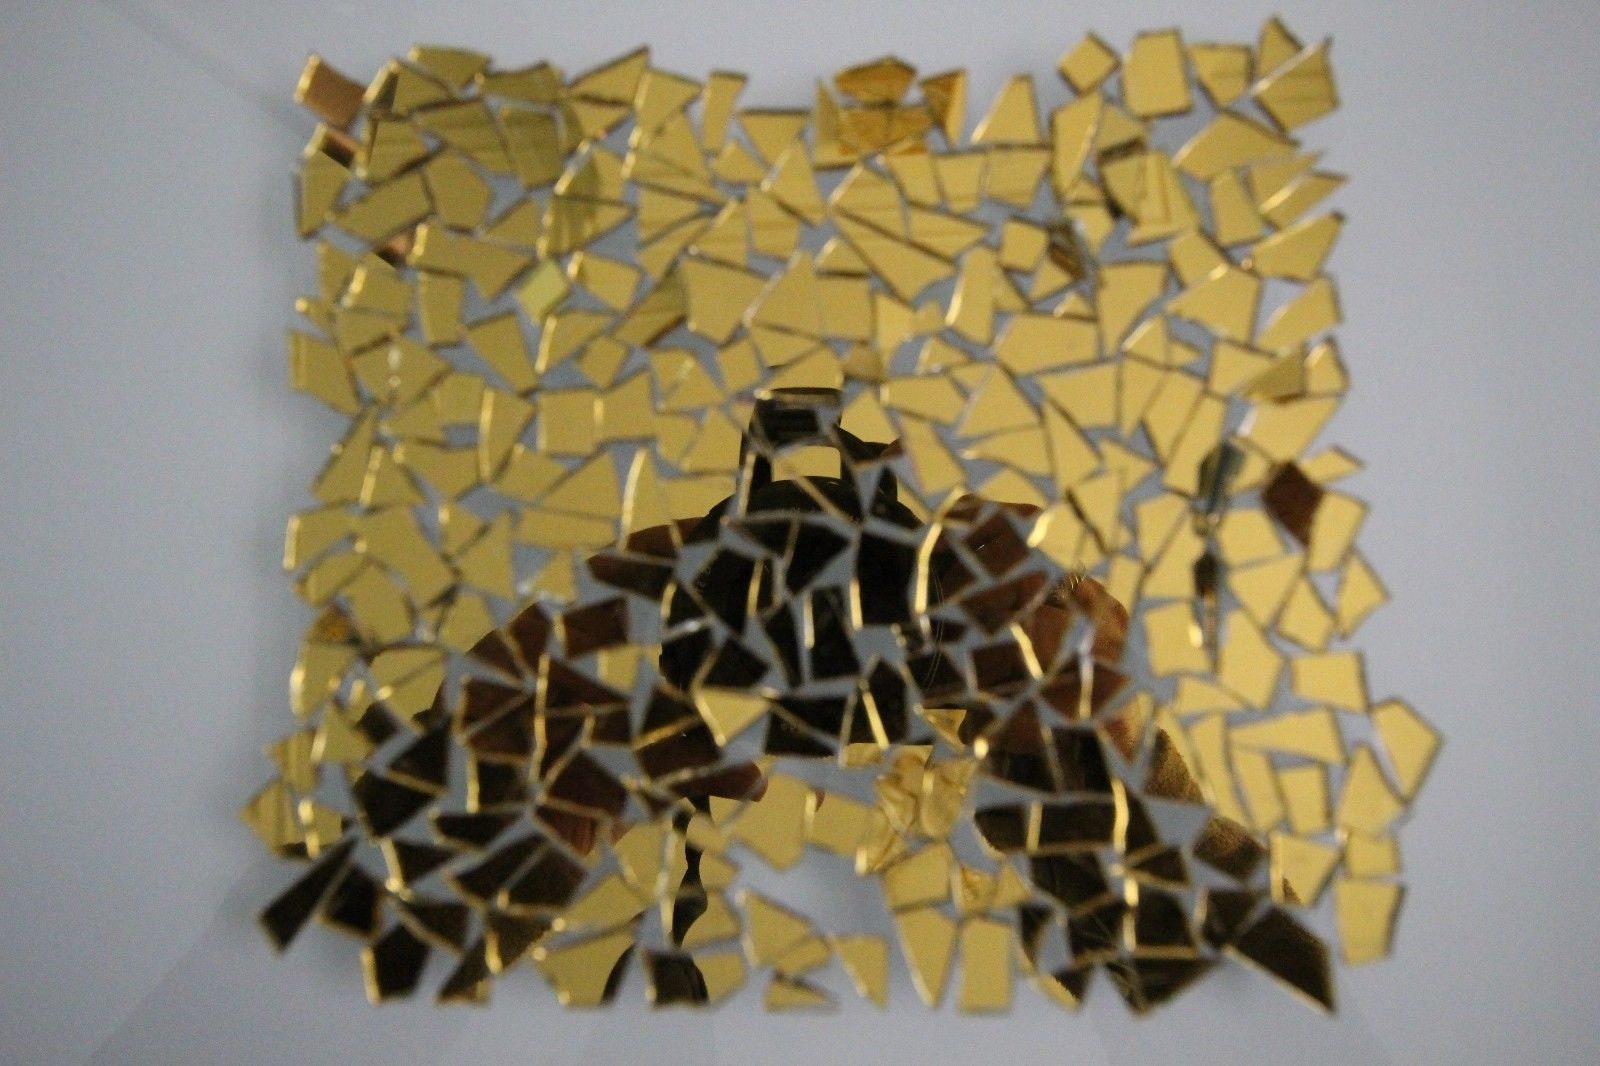 Small Mirror Shapes Craft Tiles Art Circles Hearts Squares Mosaics